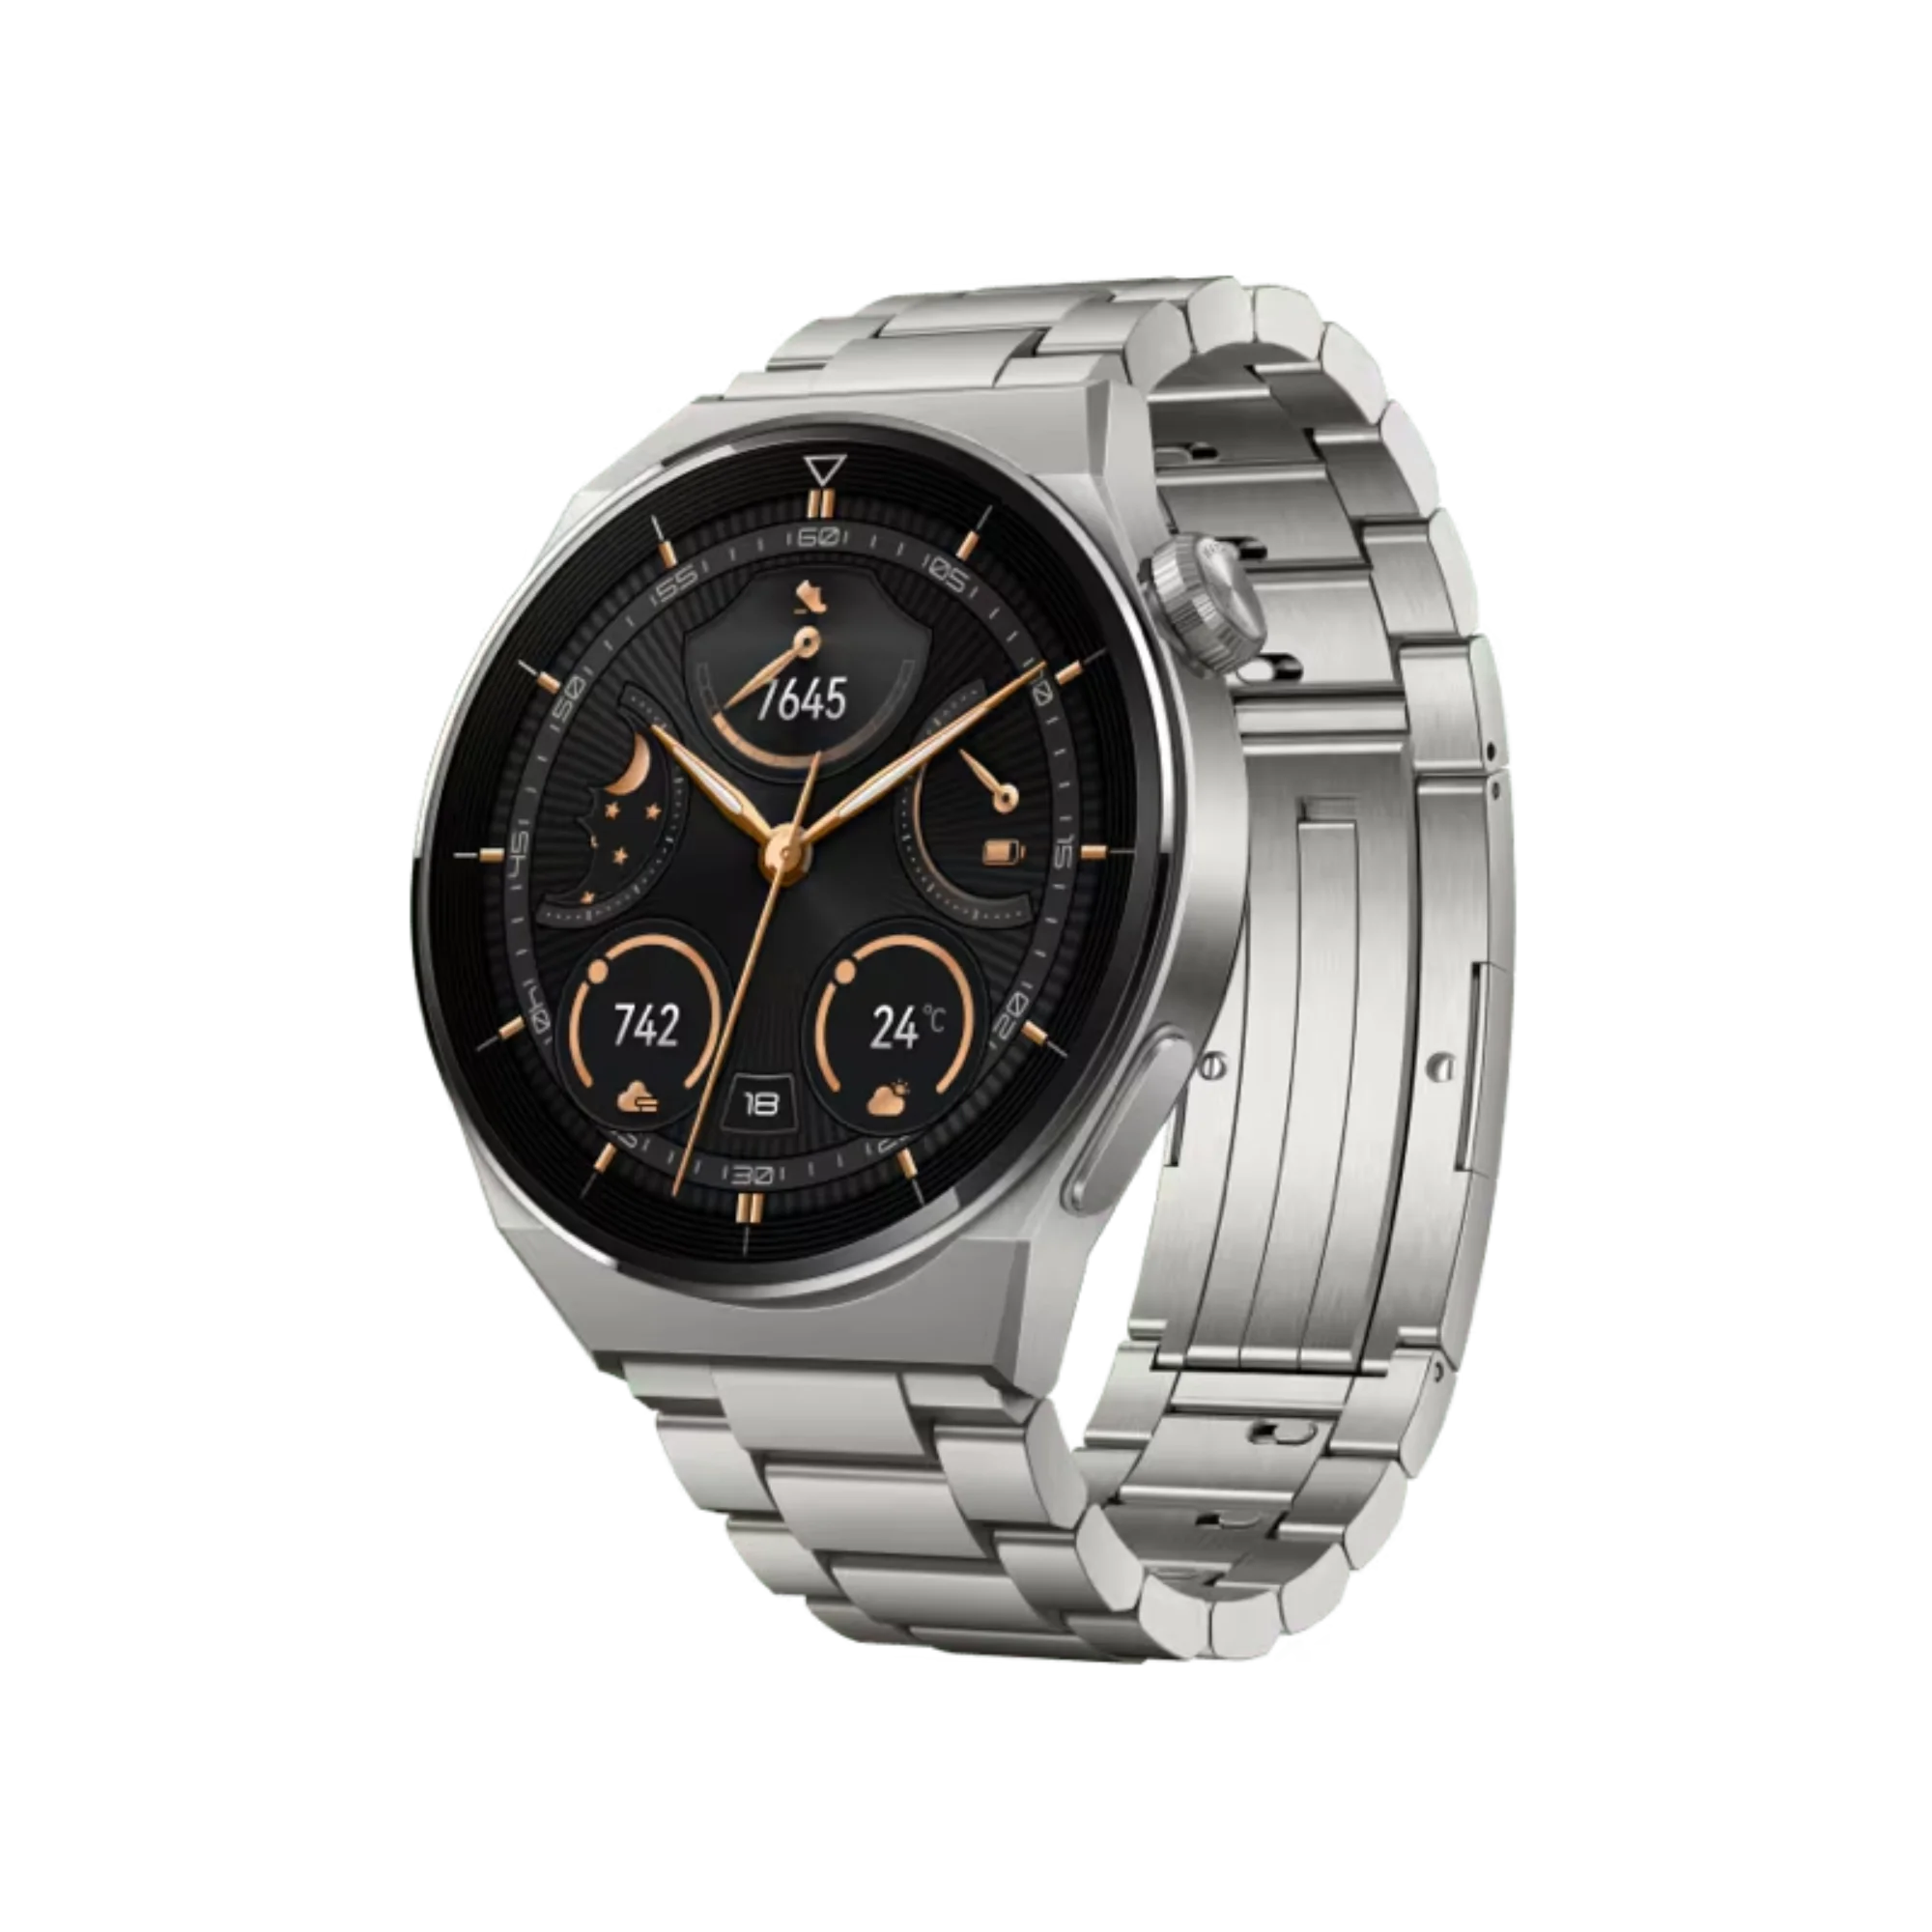 Foto: Smartwatch Huawei Watch GT 3 Pro